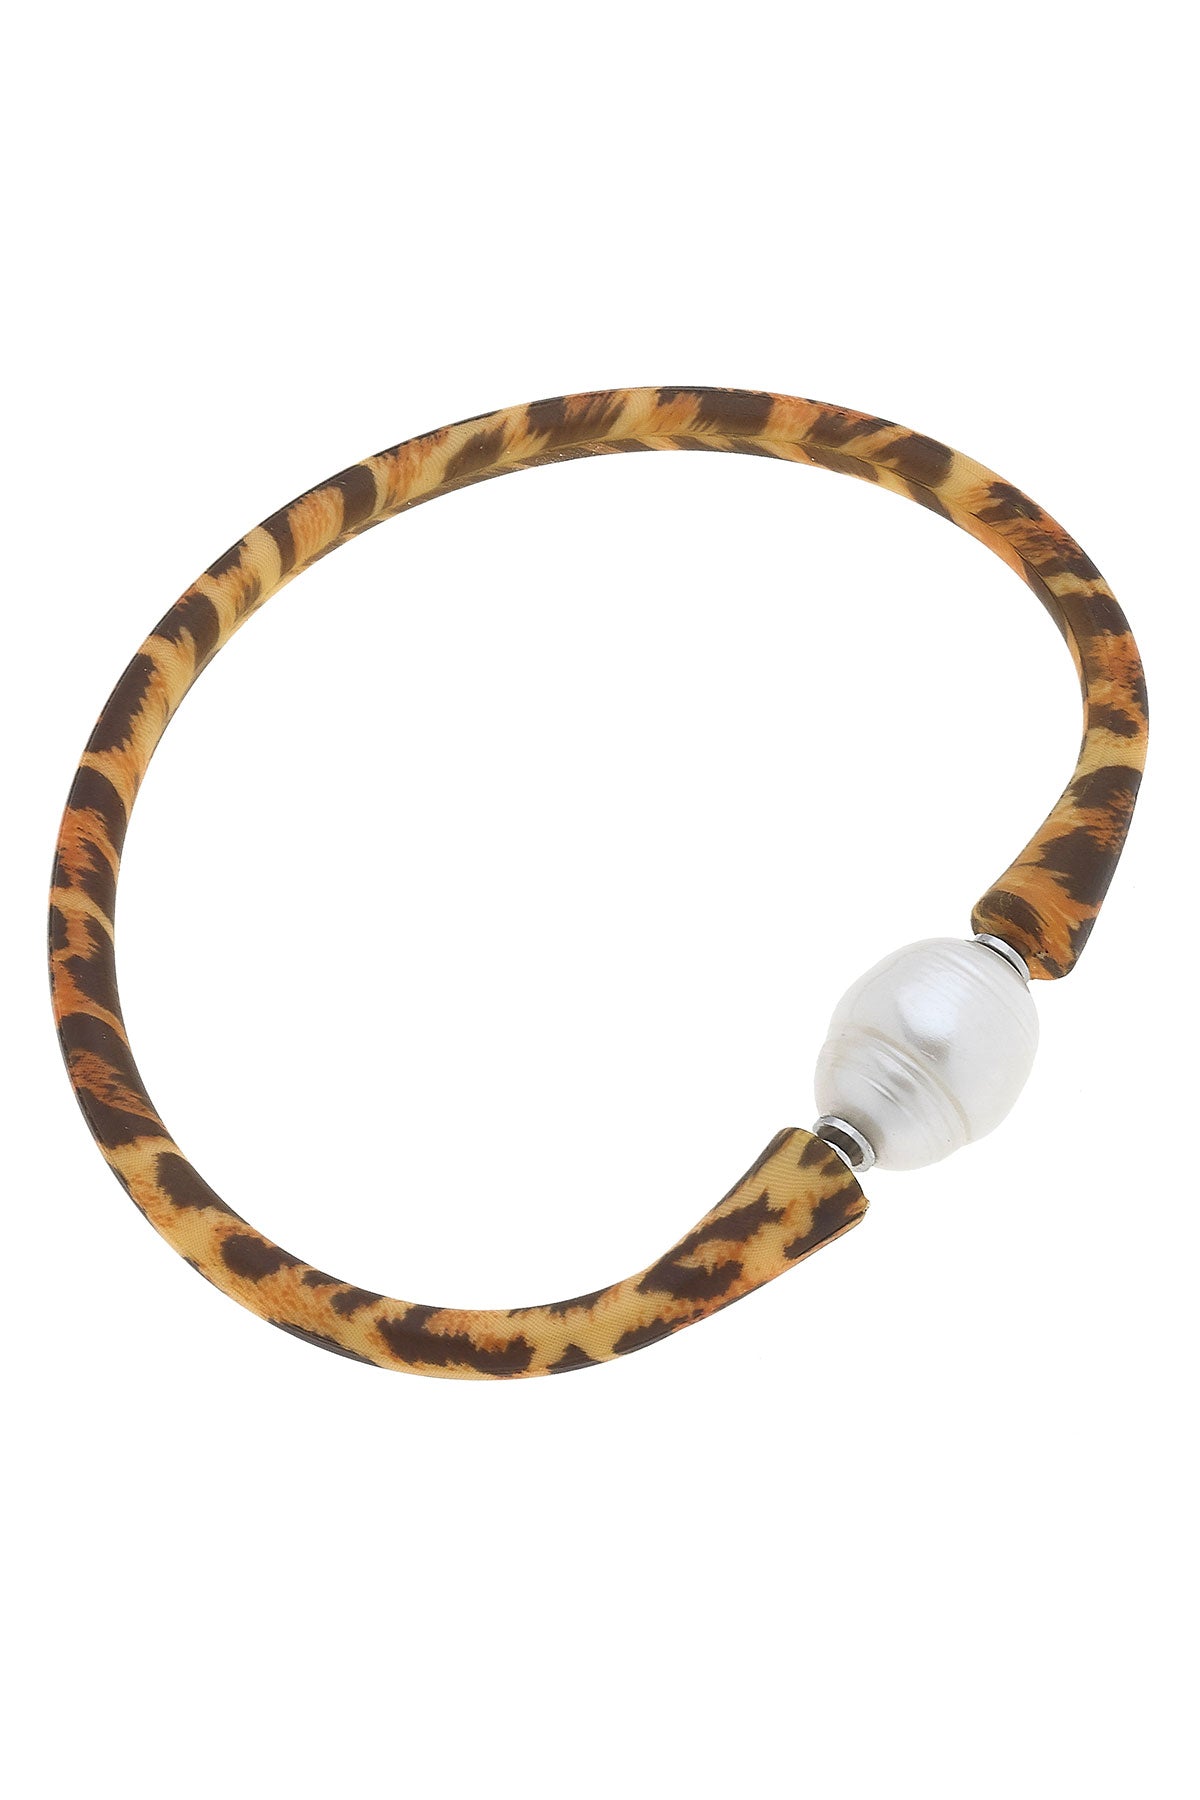 Bali Freshwater Pearl Silicone Bracelet in Leopard Print